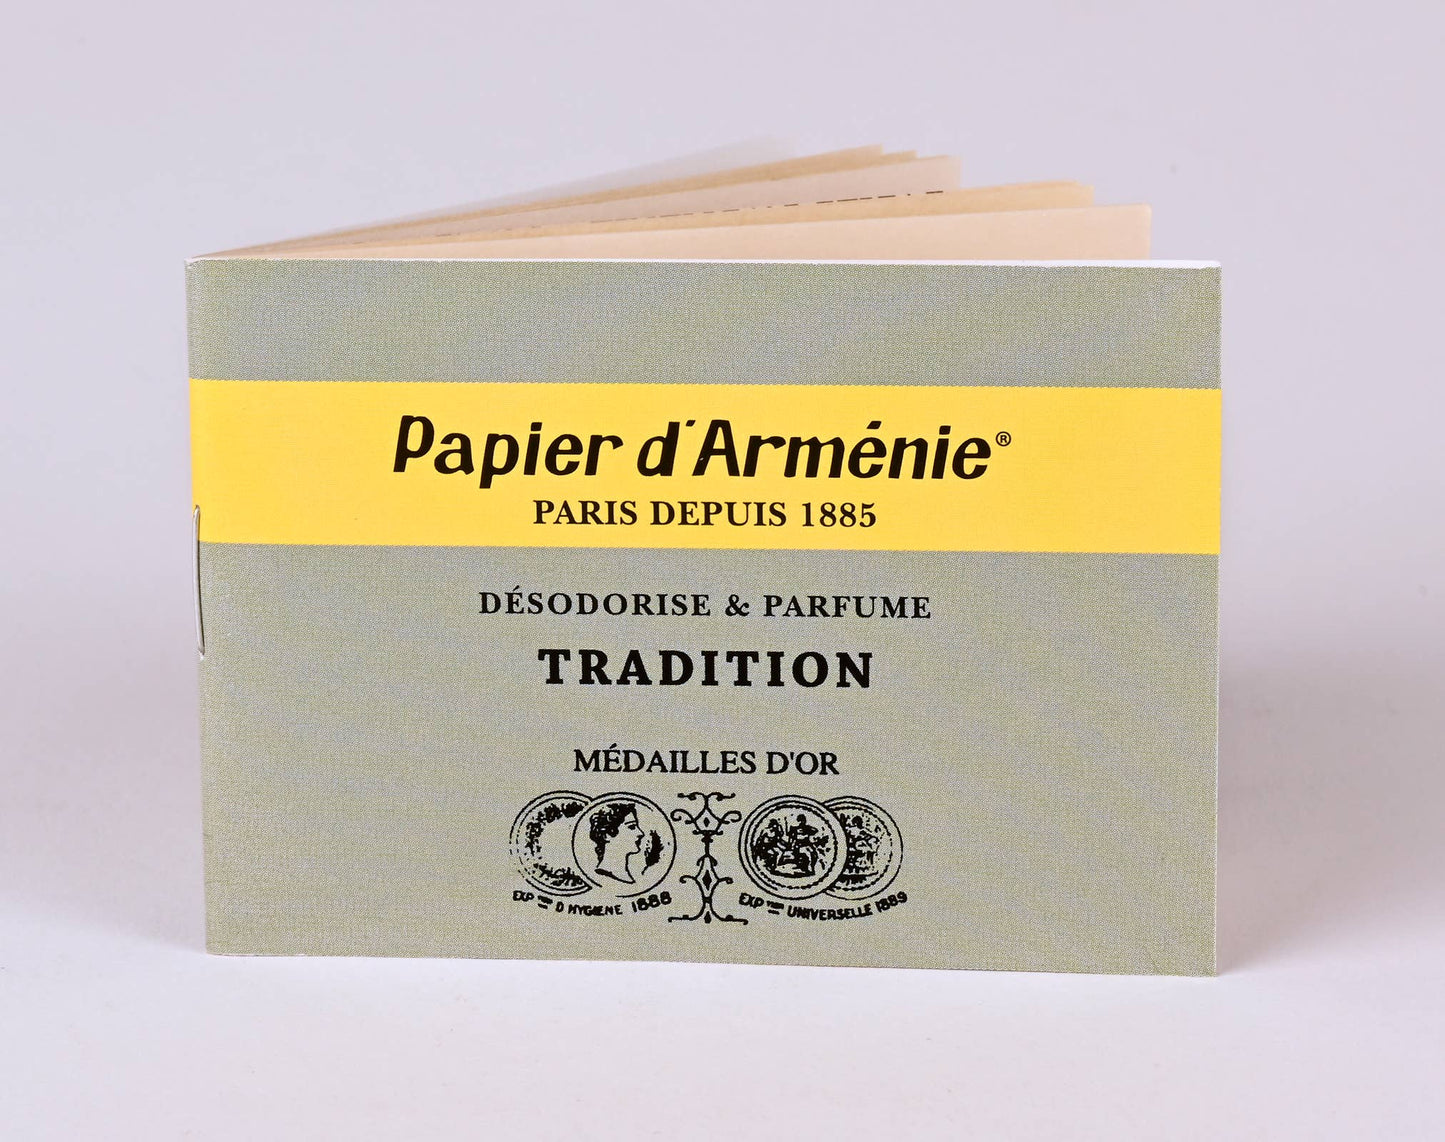 Ritual Scent - Papier d'Arménie French Incense paper booklets (darmenie)